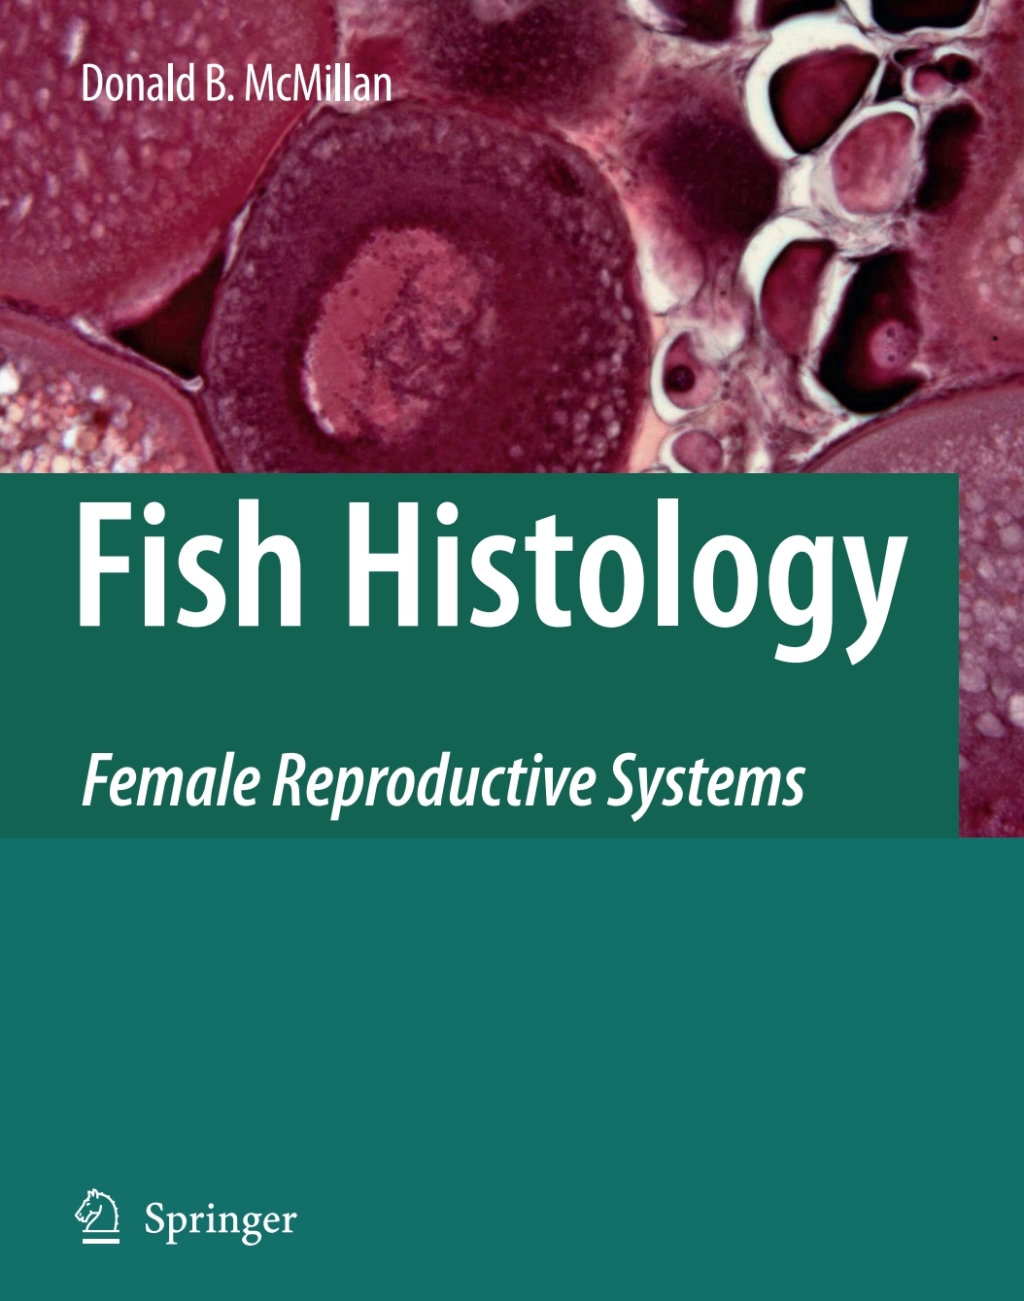 Fish Histology (eBook Rental) - Donald B. McMillan,